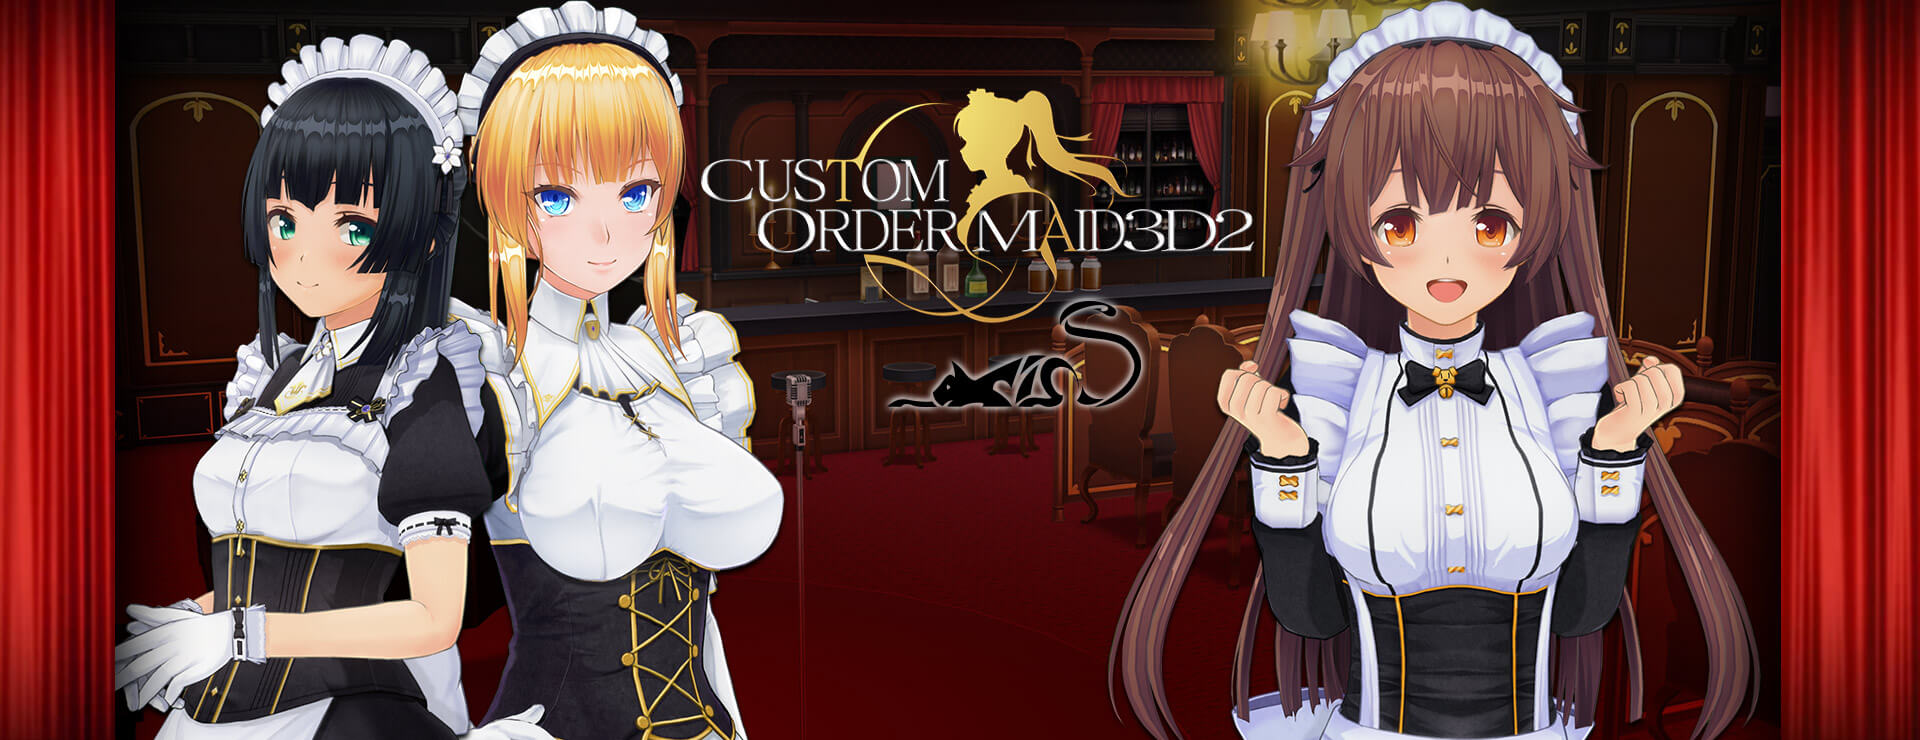 Custom Order Maid 3D2 GP 01 (DLC) - アクションアドベンチャー ゲーム